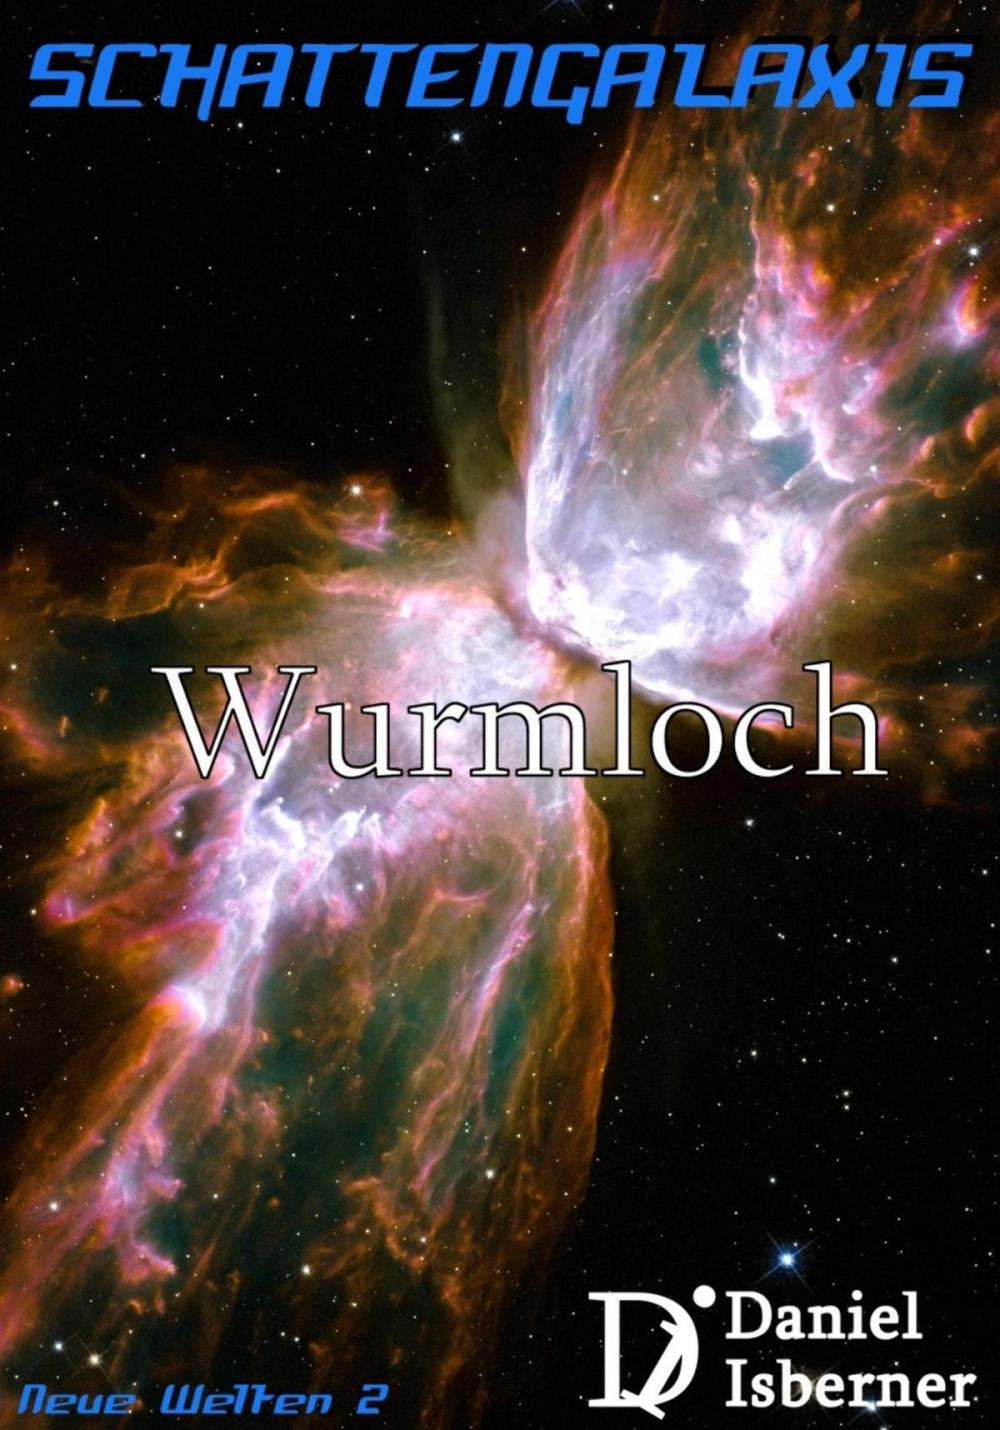 Big bigCover of Schattengalaxis - Wurmloch